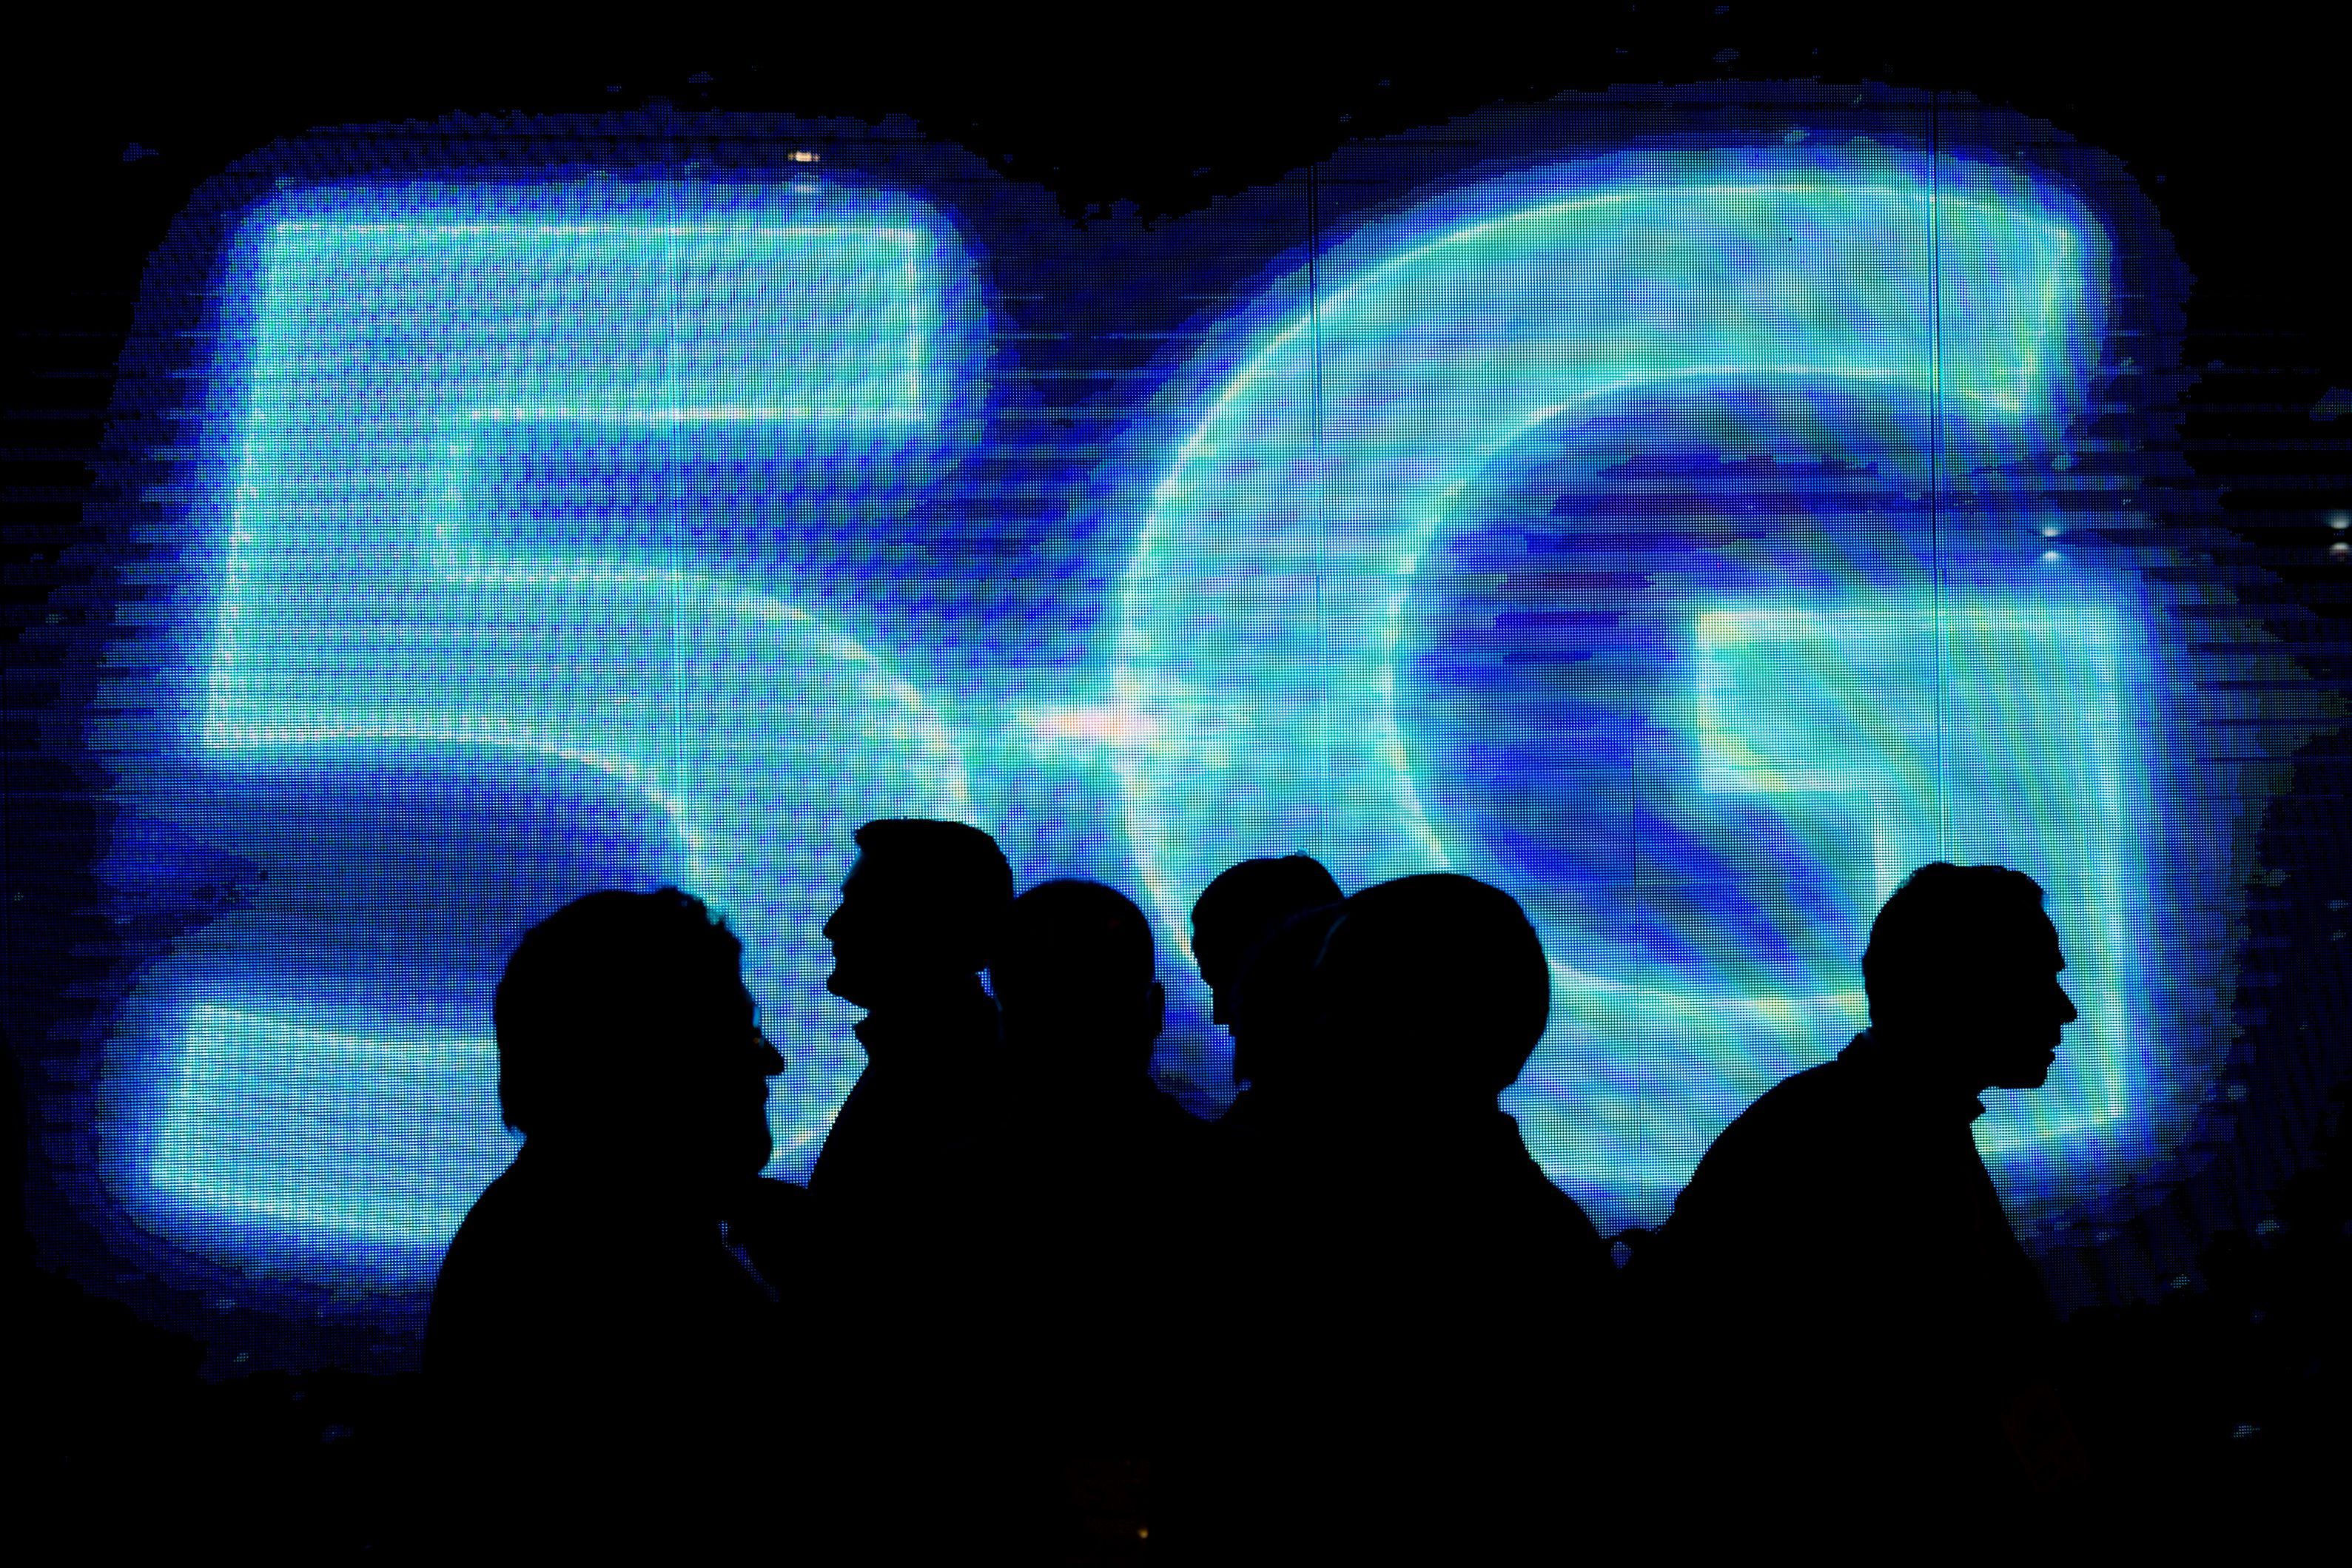  5G berjanji untuk mengubah Internet seperti yang kita ketahui ... tetapi apakah itu aman?